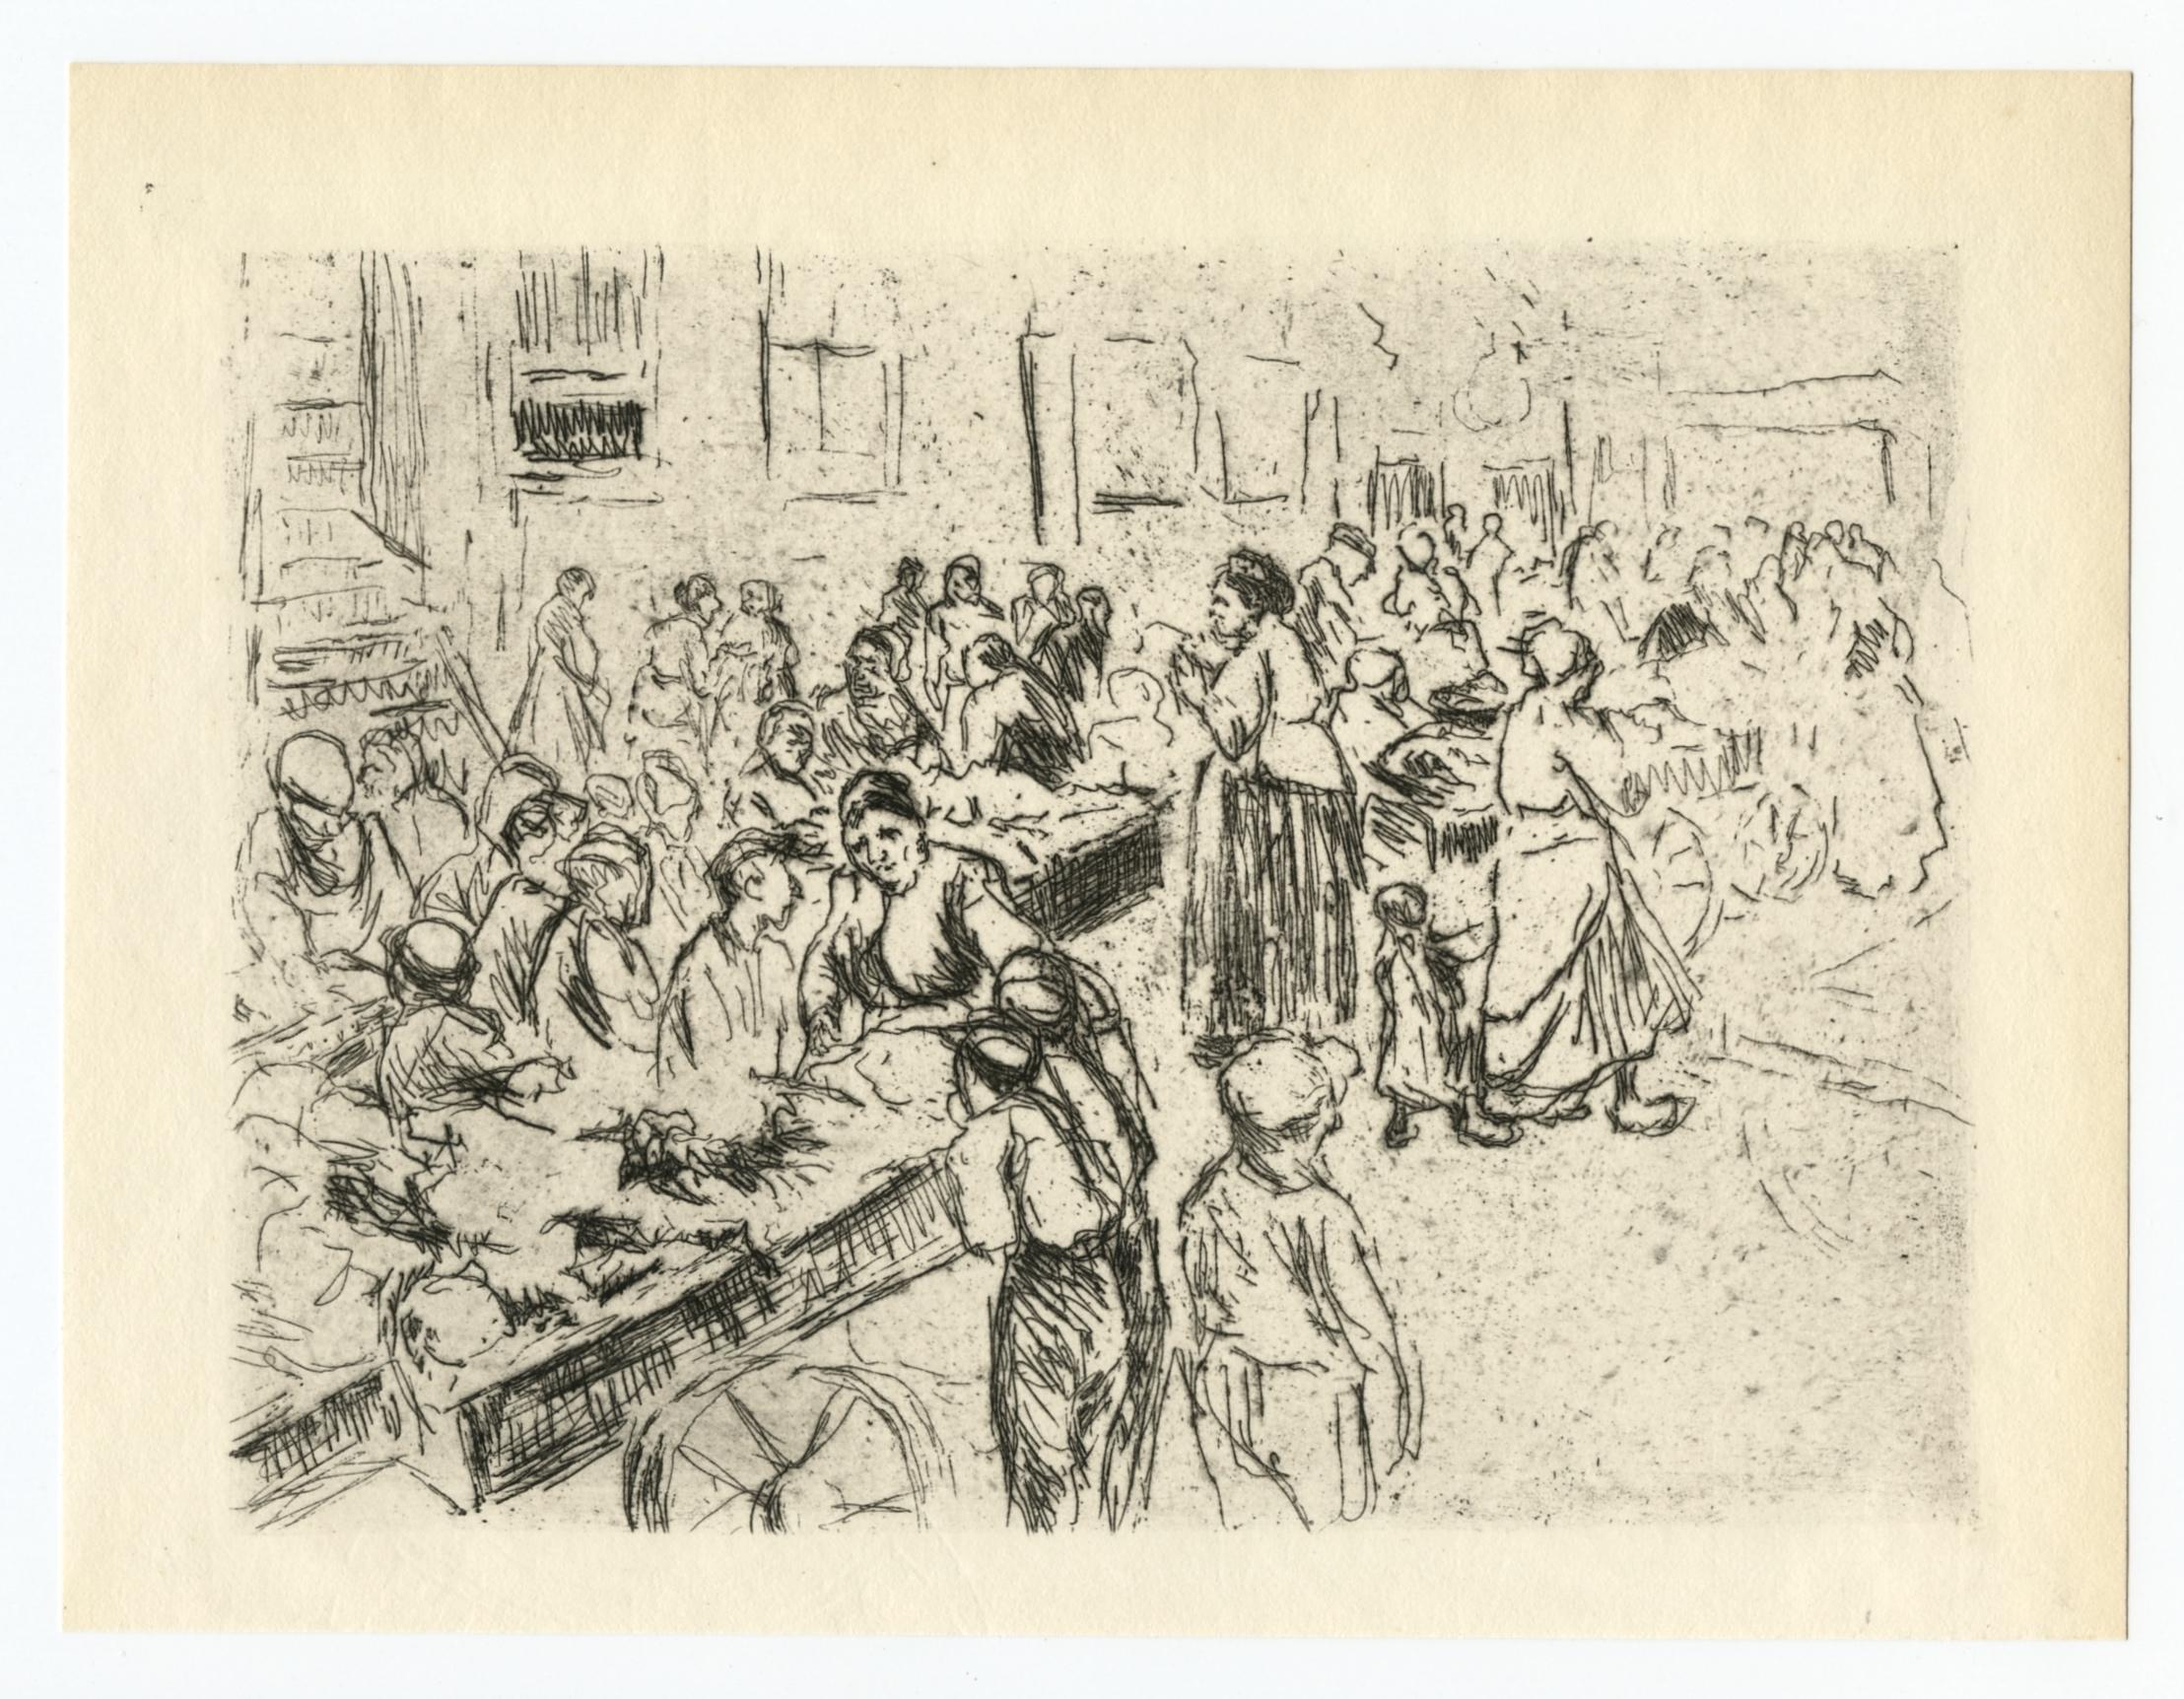 "Amsterdam Jewish Quarter" original etching - Print by Max Liebermann